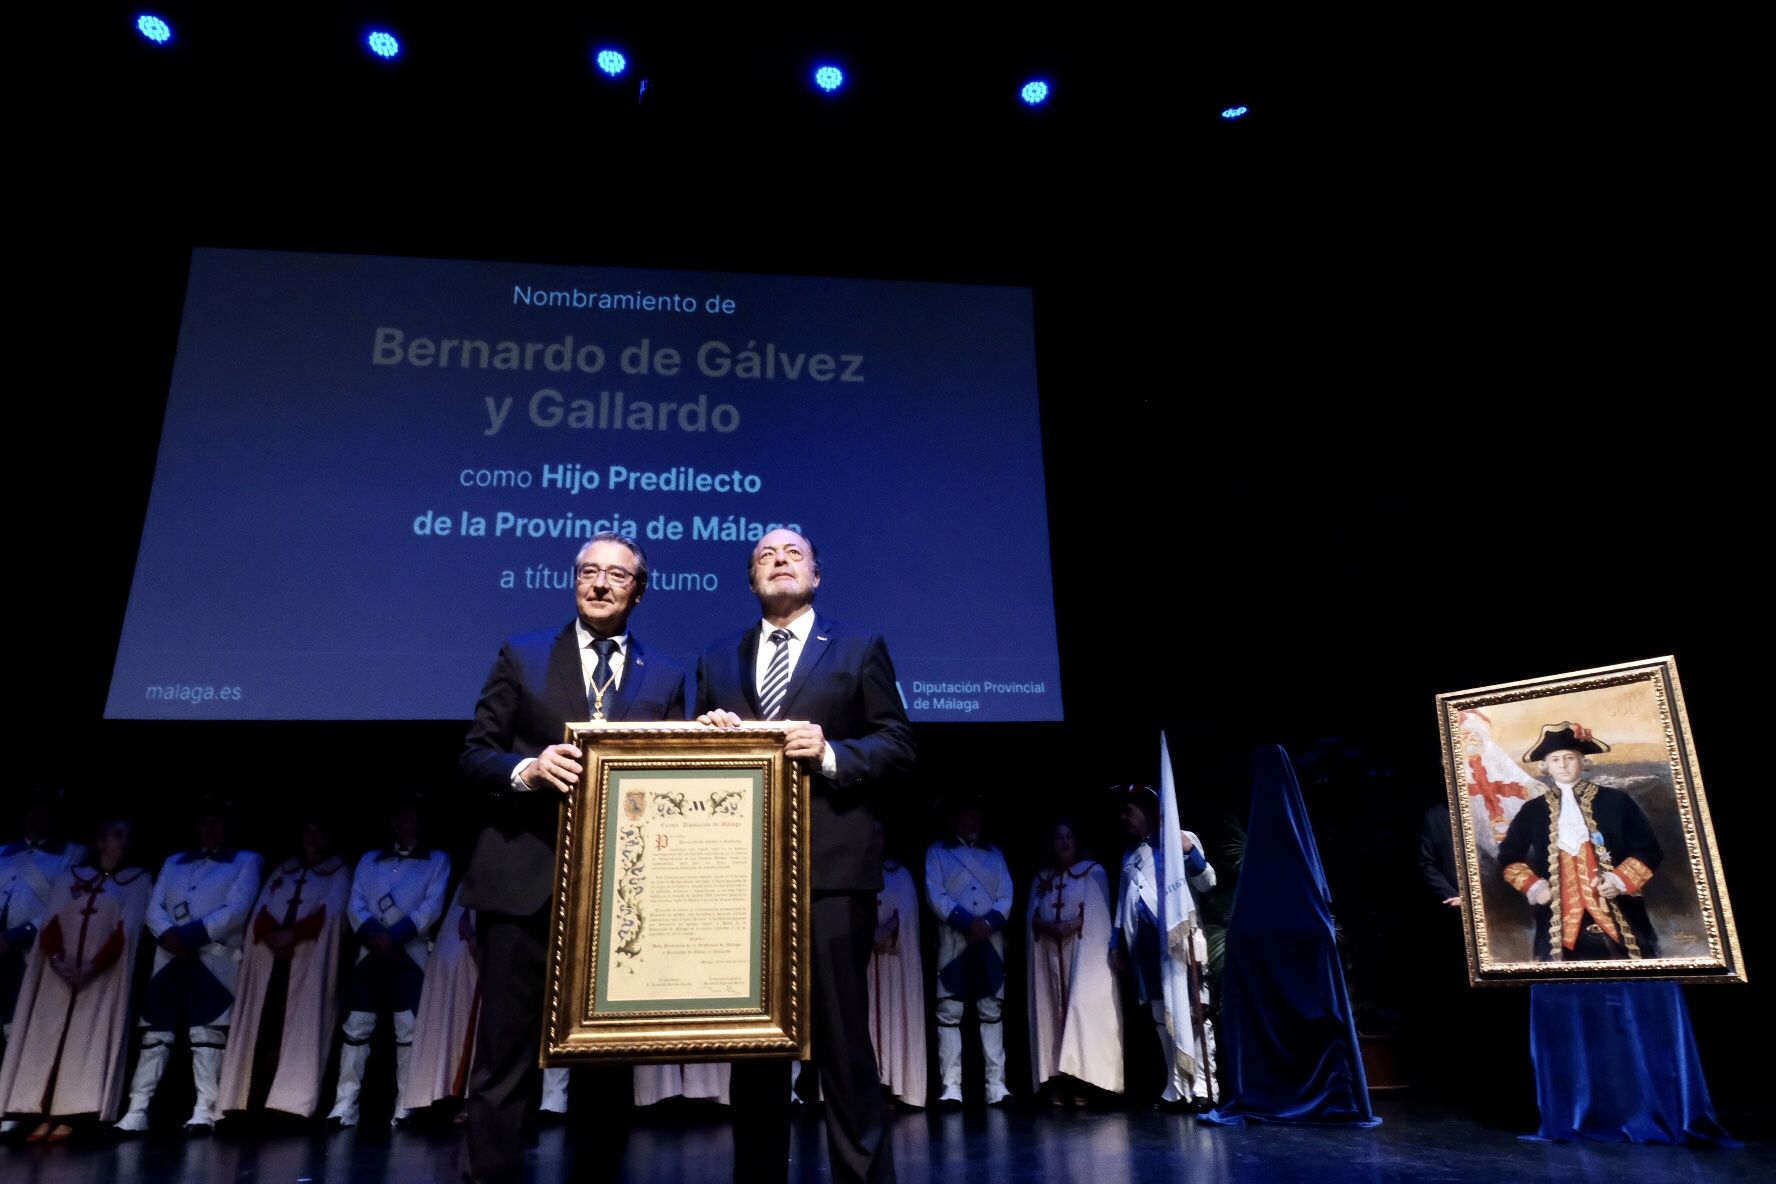 Nombra Hijo Predilecto de la provincia de Málaga a Bernardo de Gálvez